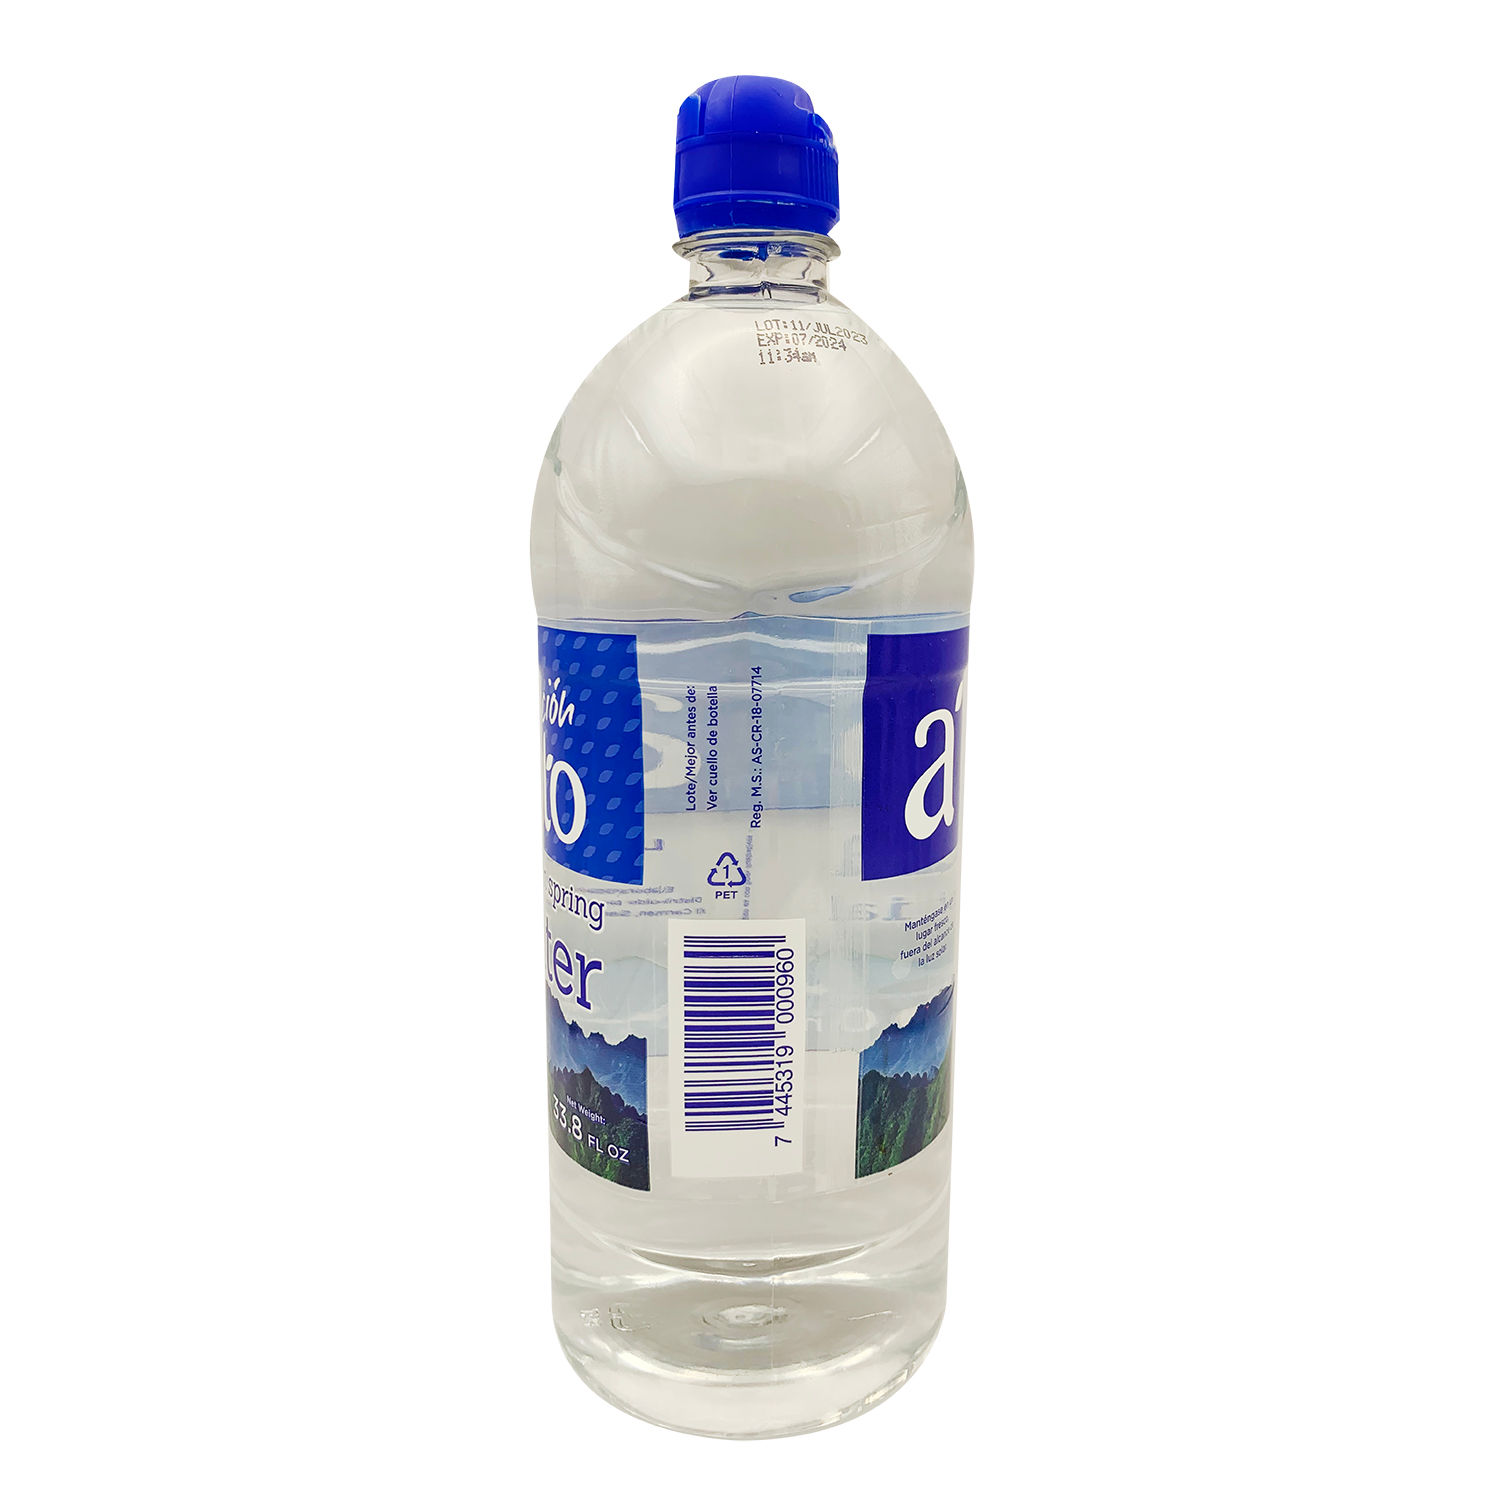 Agua Natural Manantial Seleccion Auto Botella 1000 Ml